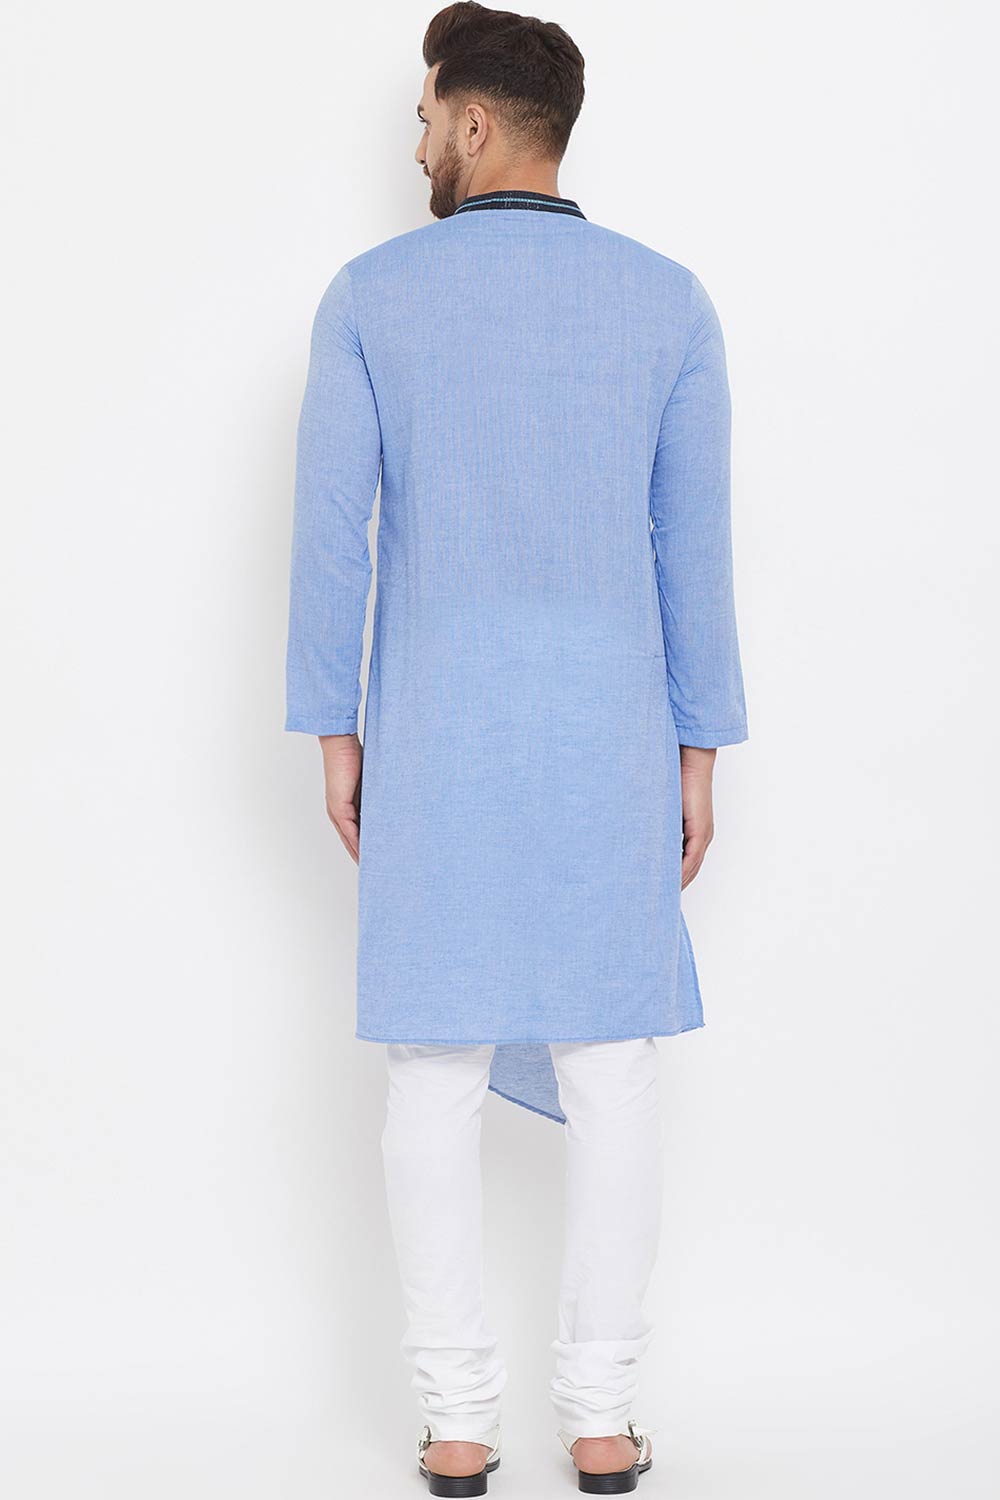 Buy Men's Blended Cotton Solid Kurta in Blue - Zoom In